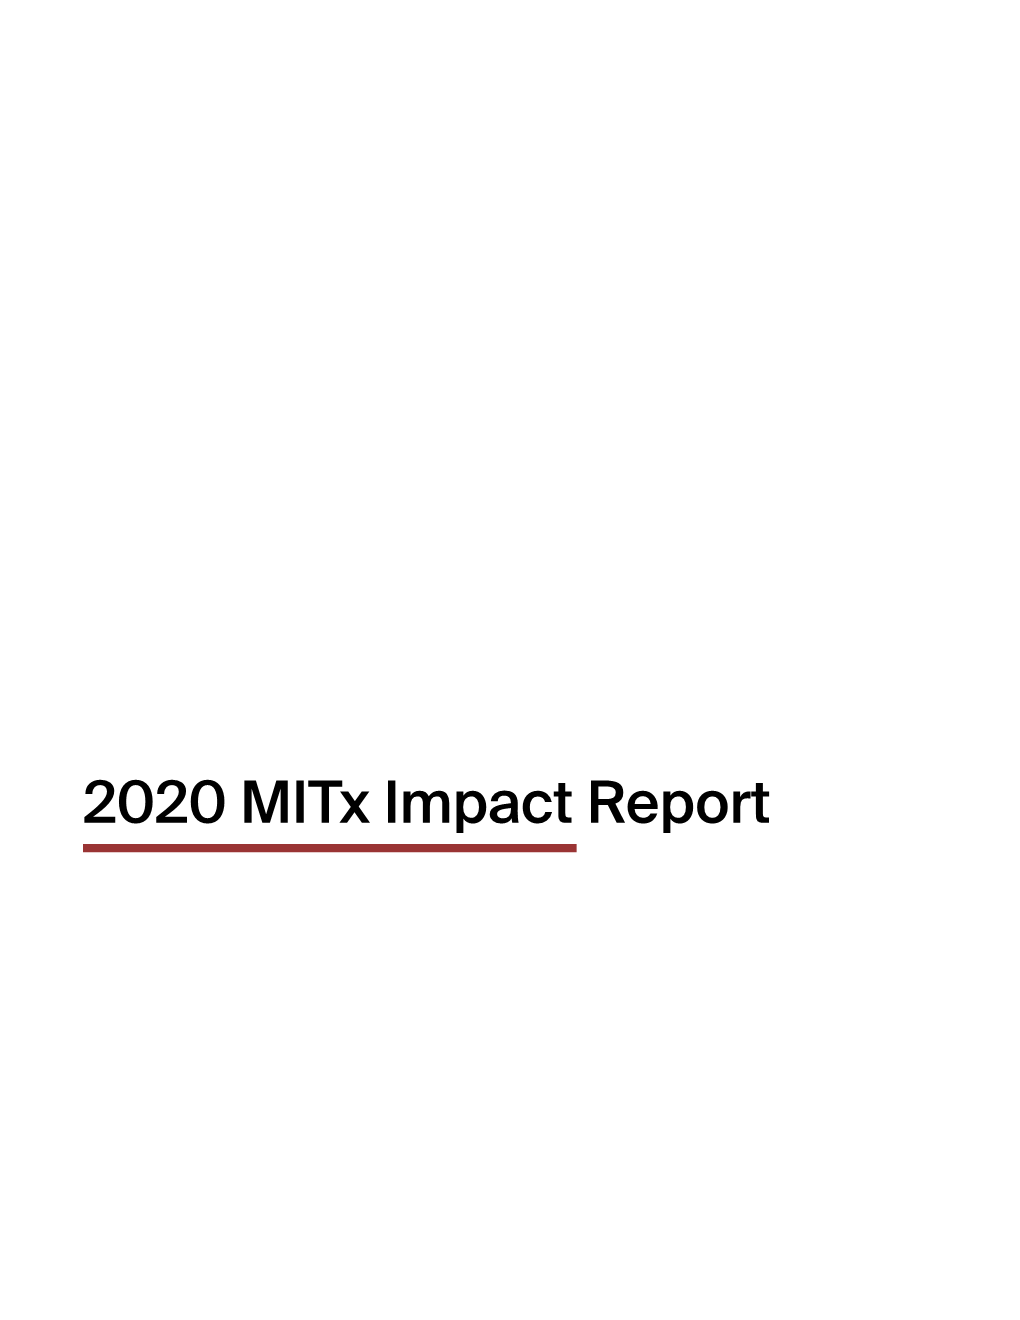 2020 Mitx Impact Report Reflections